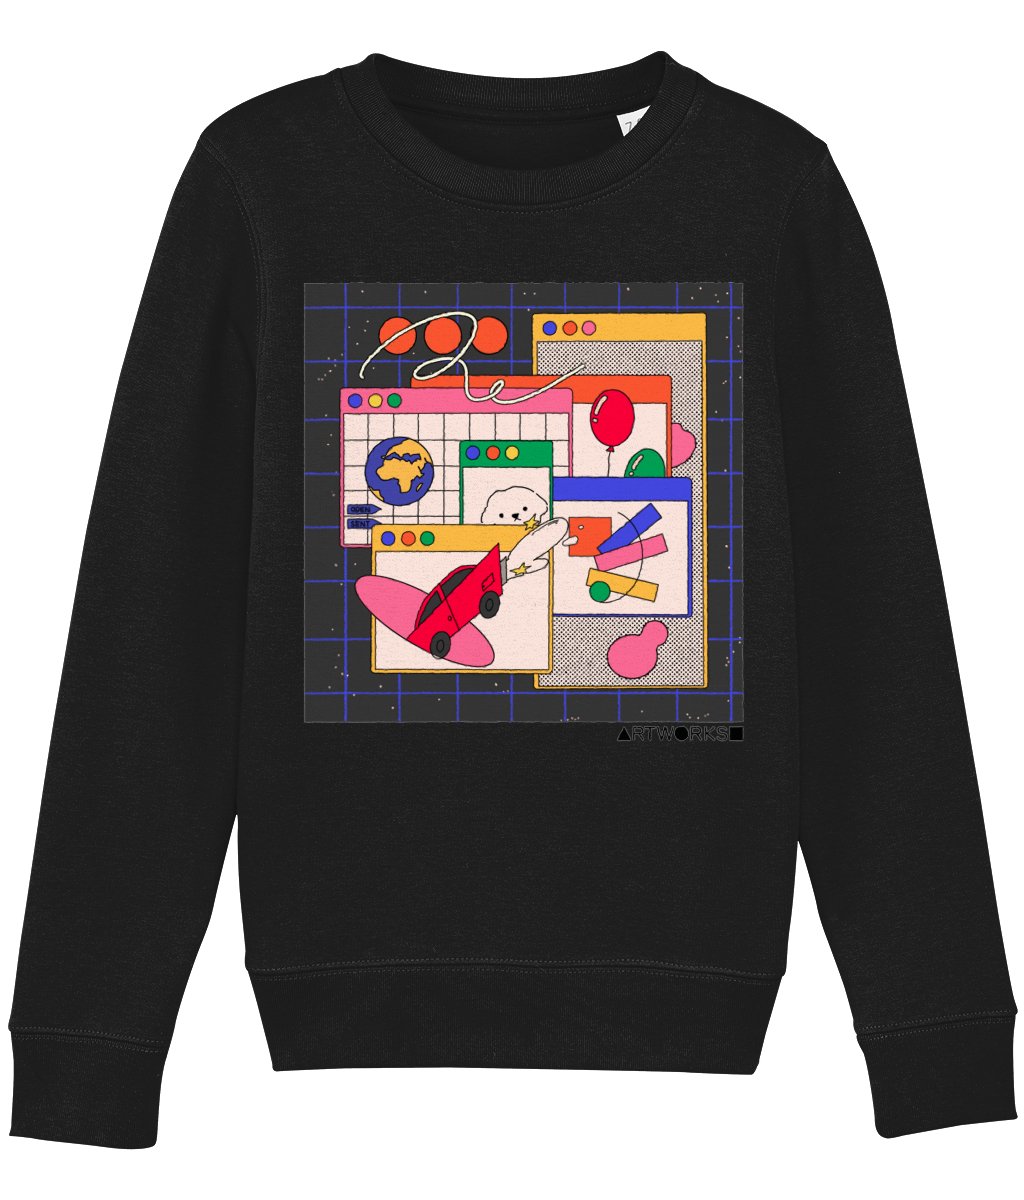 Cosmic Party Sweatshirt - Artworks Clothing